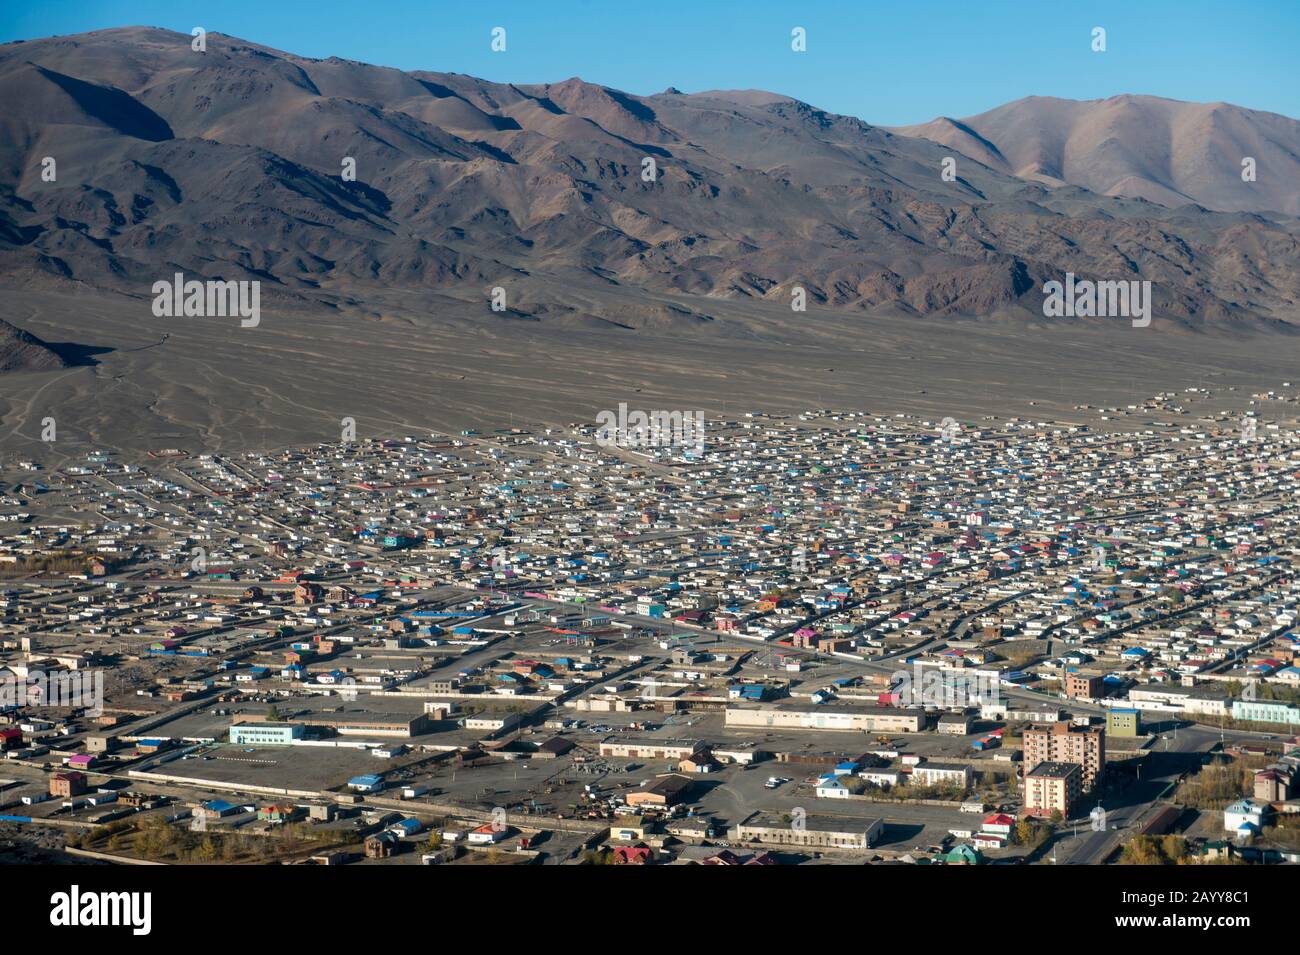 Aerial view of Ulgii on the flight from Ulaanbaatar to Ulgii (Ölgii) in western Mongolia. Stock Photo